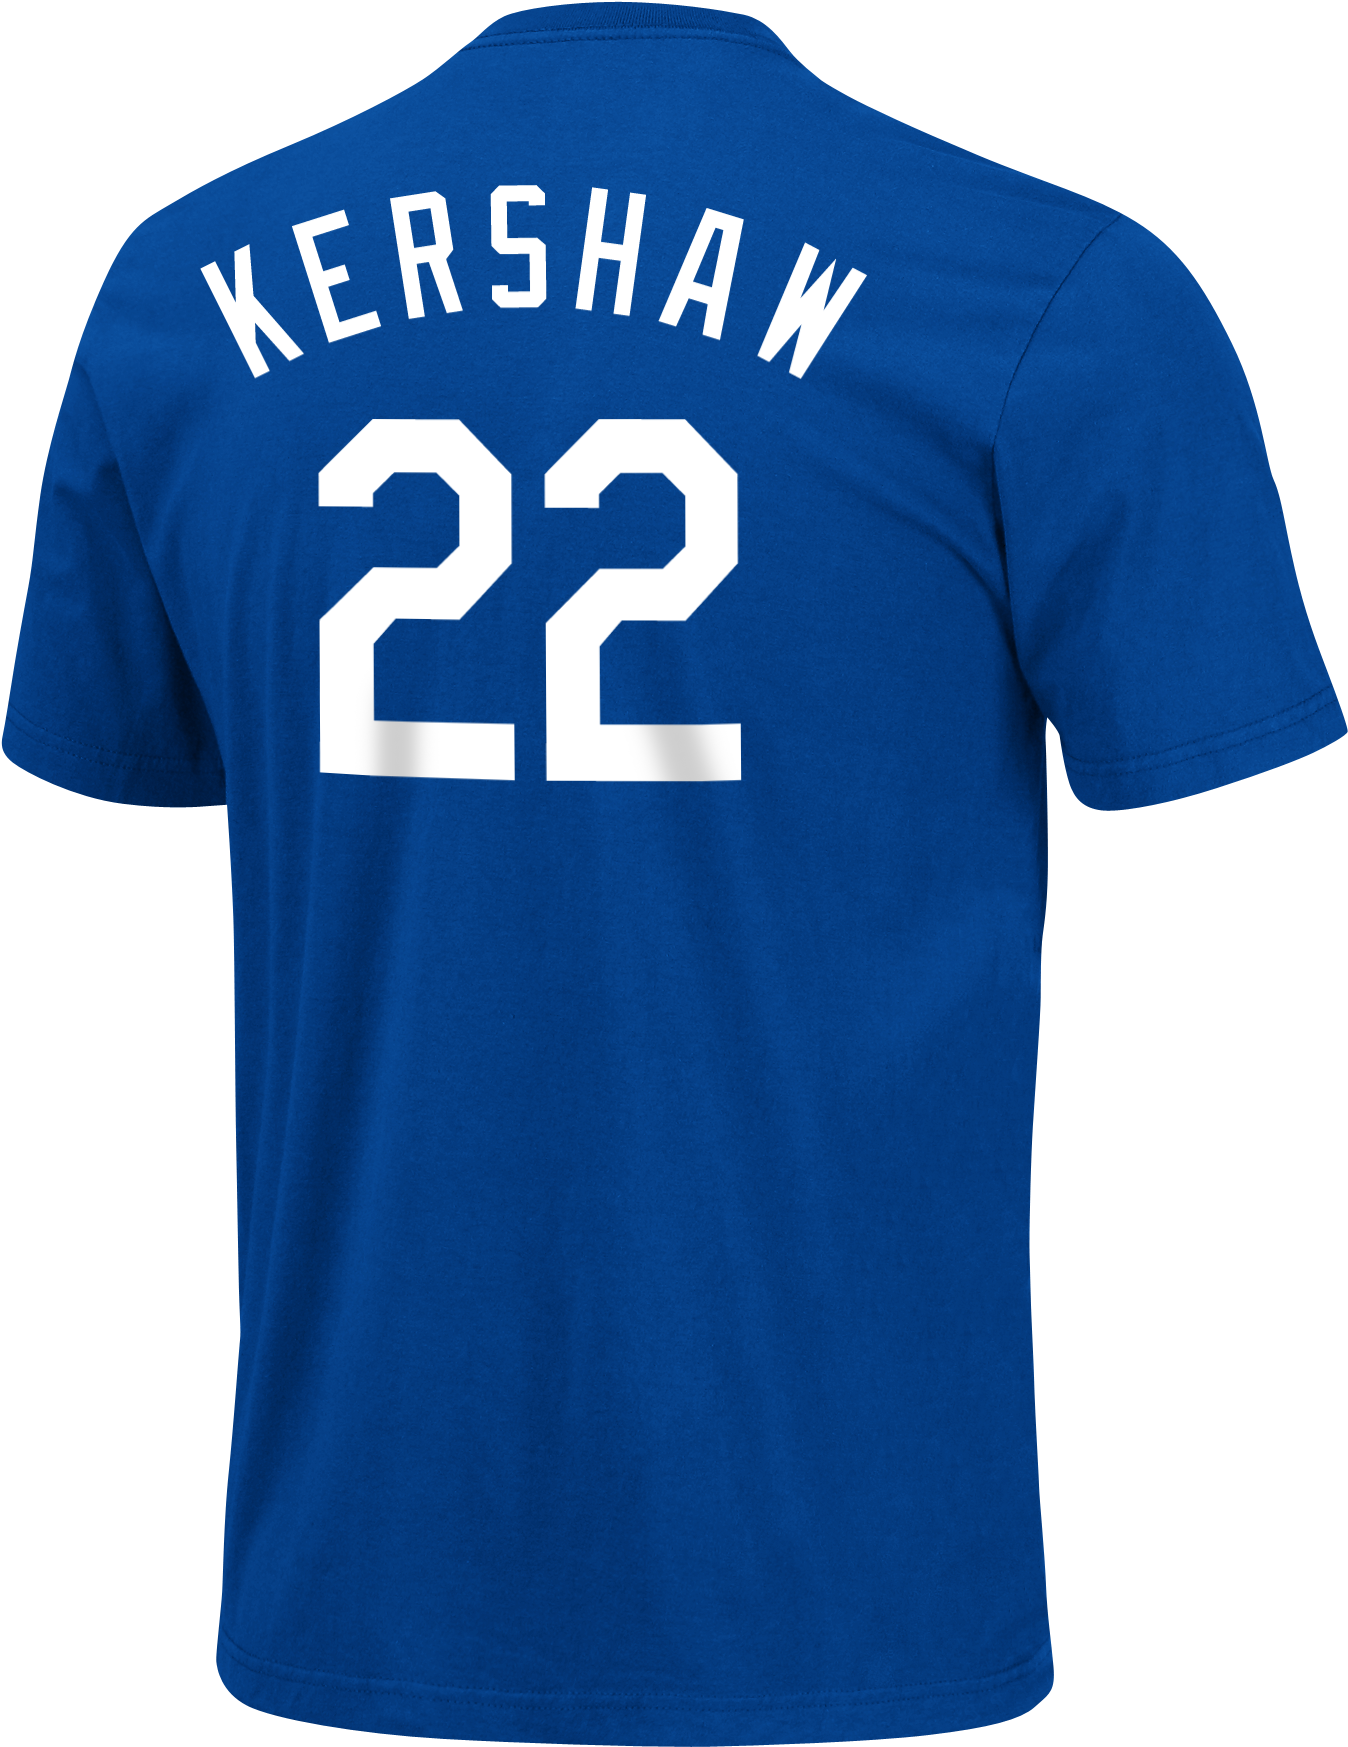 La Dodgers Clayton Kershaw T Shirt V=1495118703 - Dodgers World Series 2018 Jersey (1800x1800), Png Download